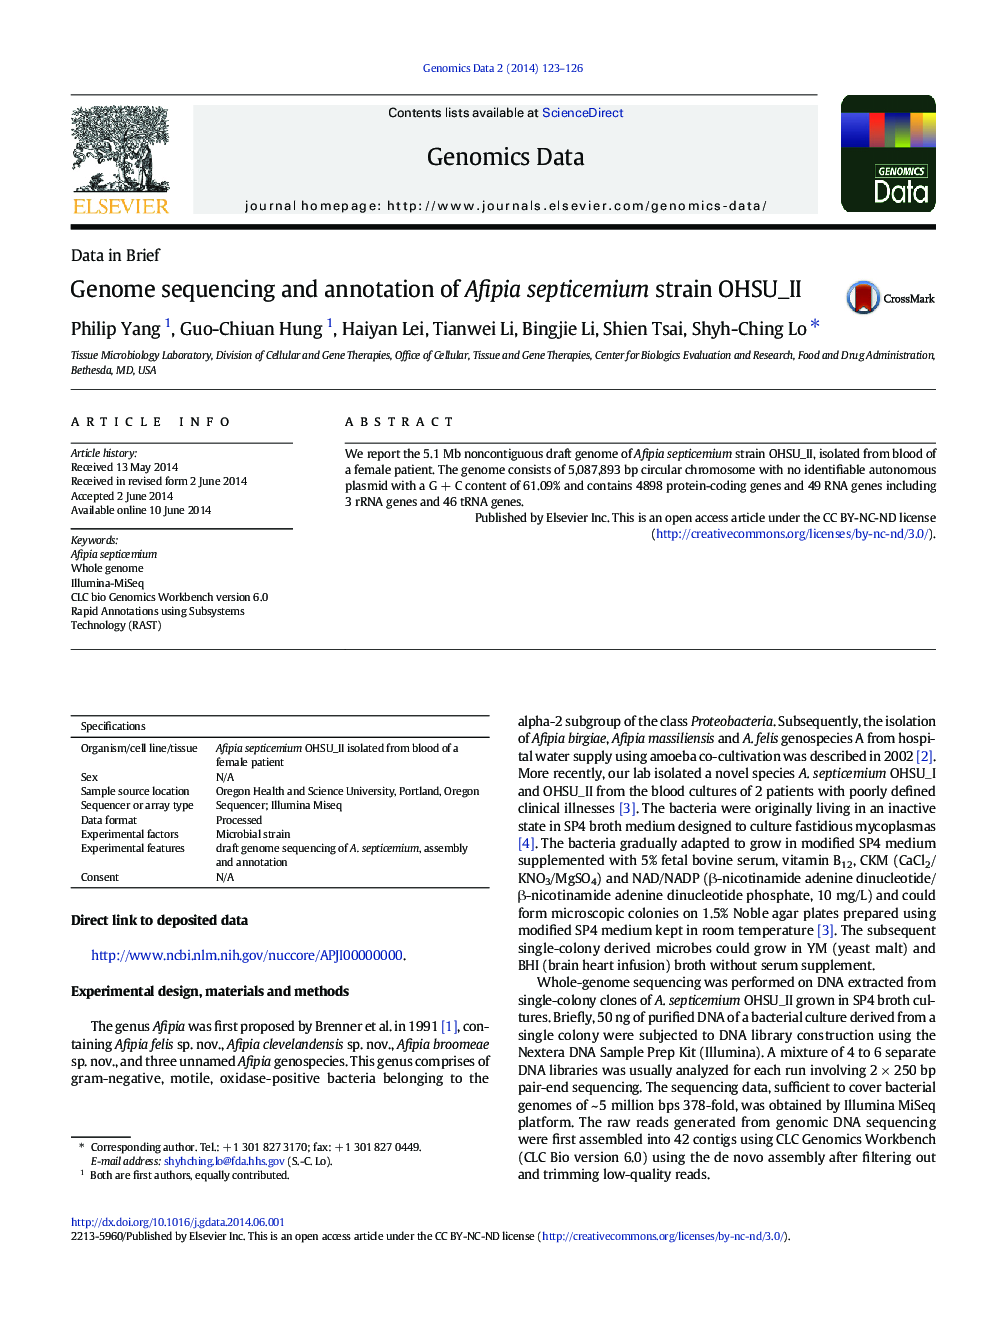 Genome sequencing and annotation of Afipia septicemium strain OHSU_II